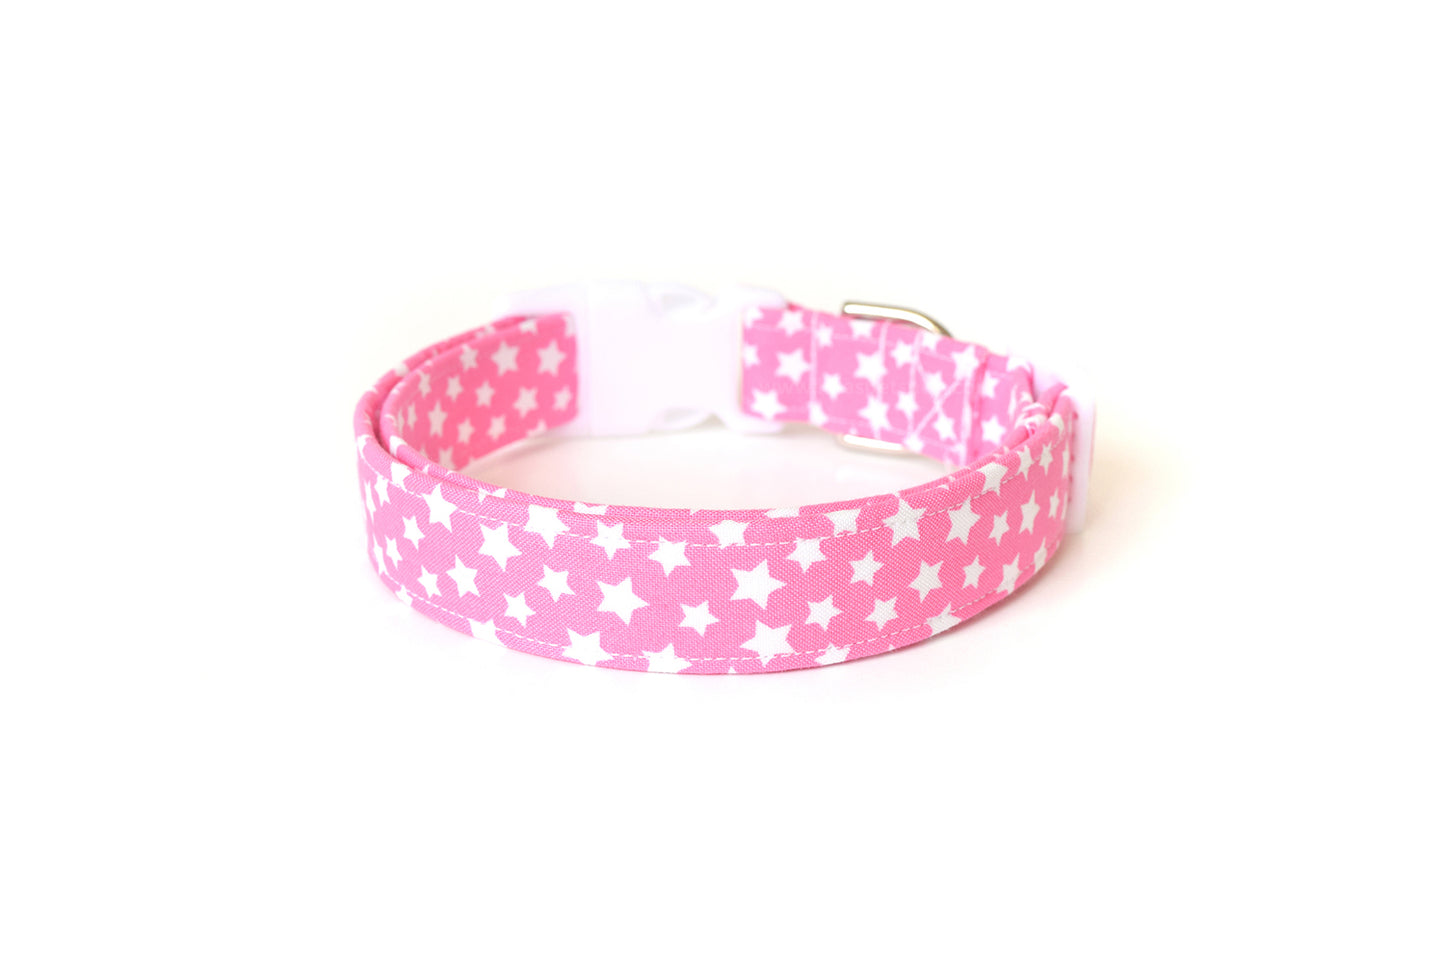 Pink & White Stars Dog Collar - Handmade by Kira's Pet Shop